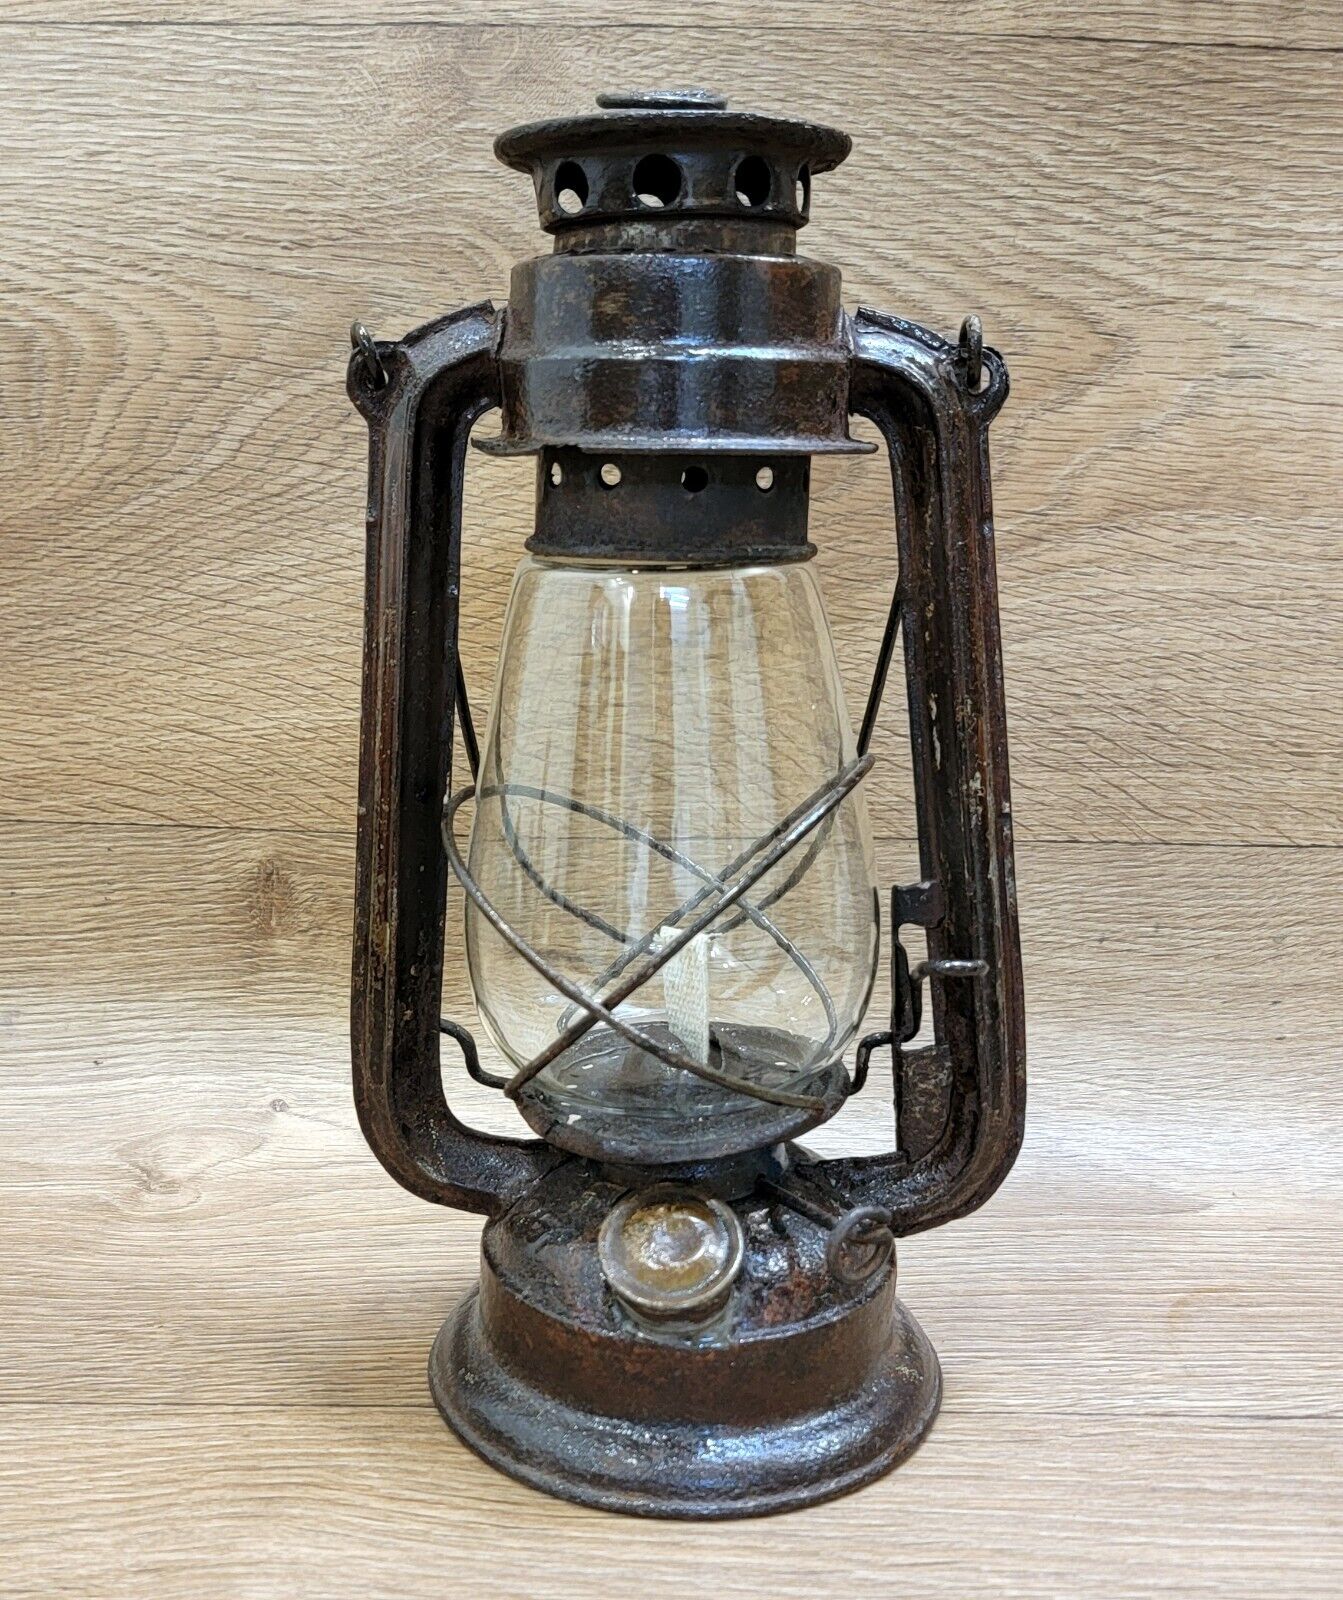 Original SUN Hurricane Lamp Antique Collectible Kerosene Oil Vintage Lantern.